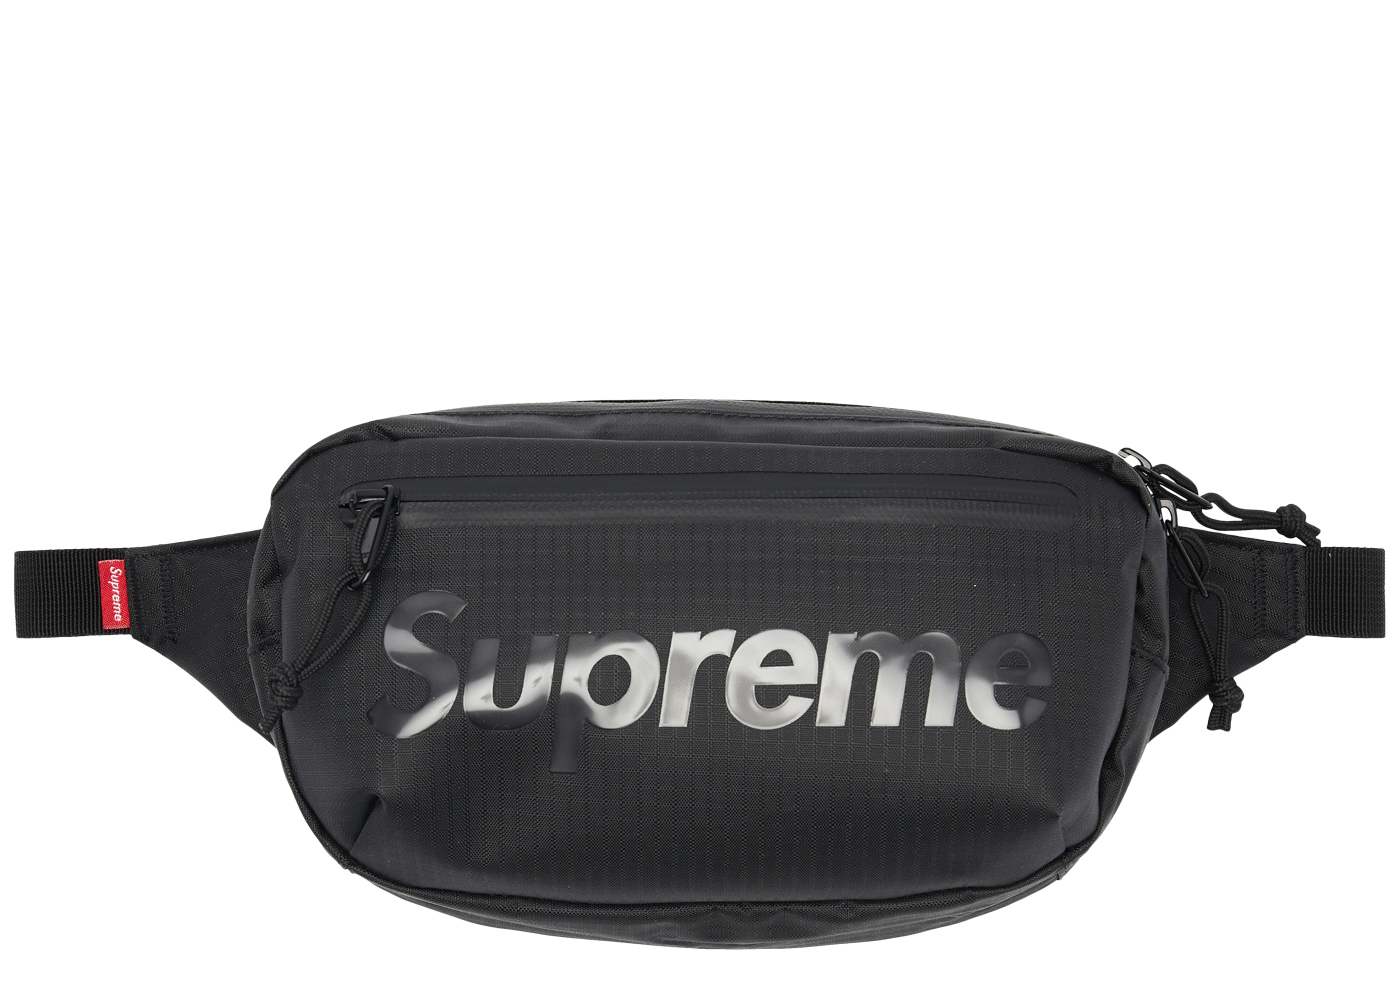 Streetwear - Supreme Bags - Most Popular